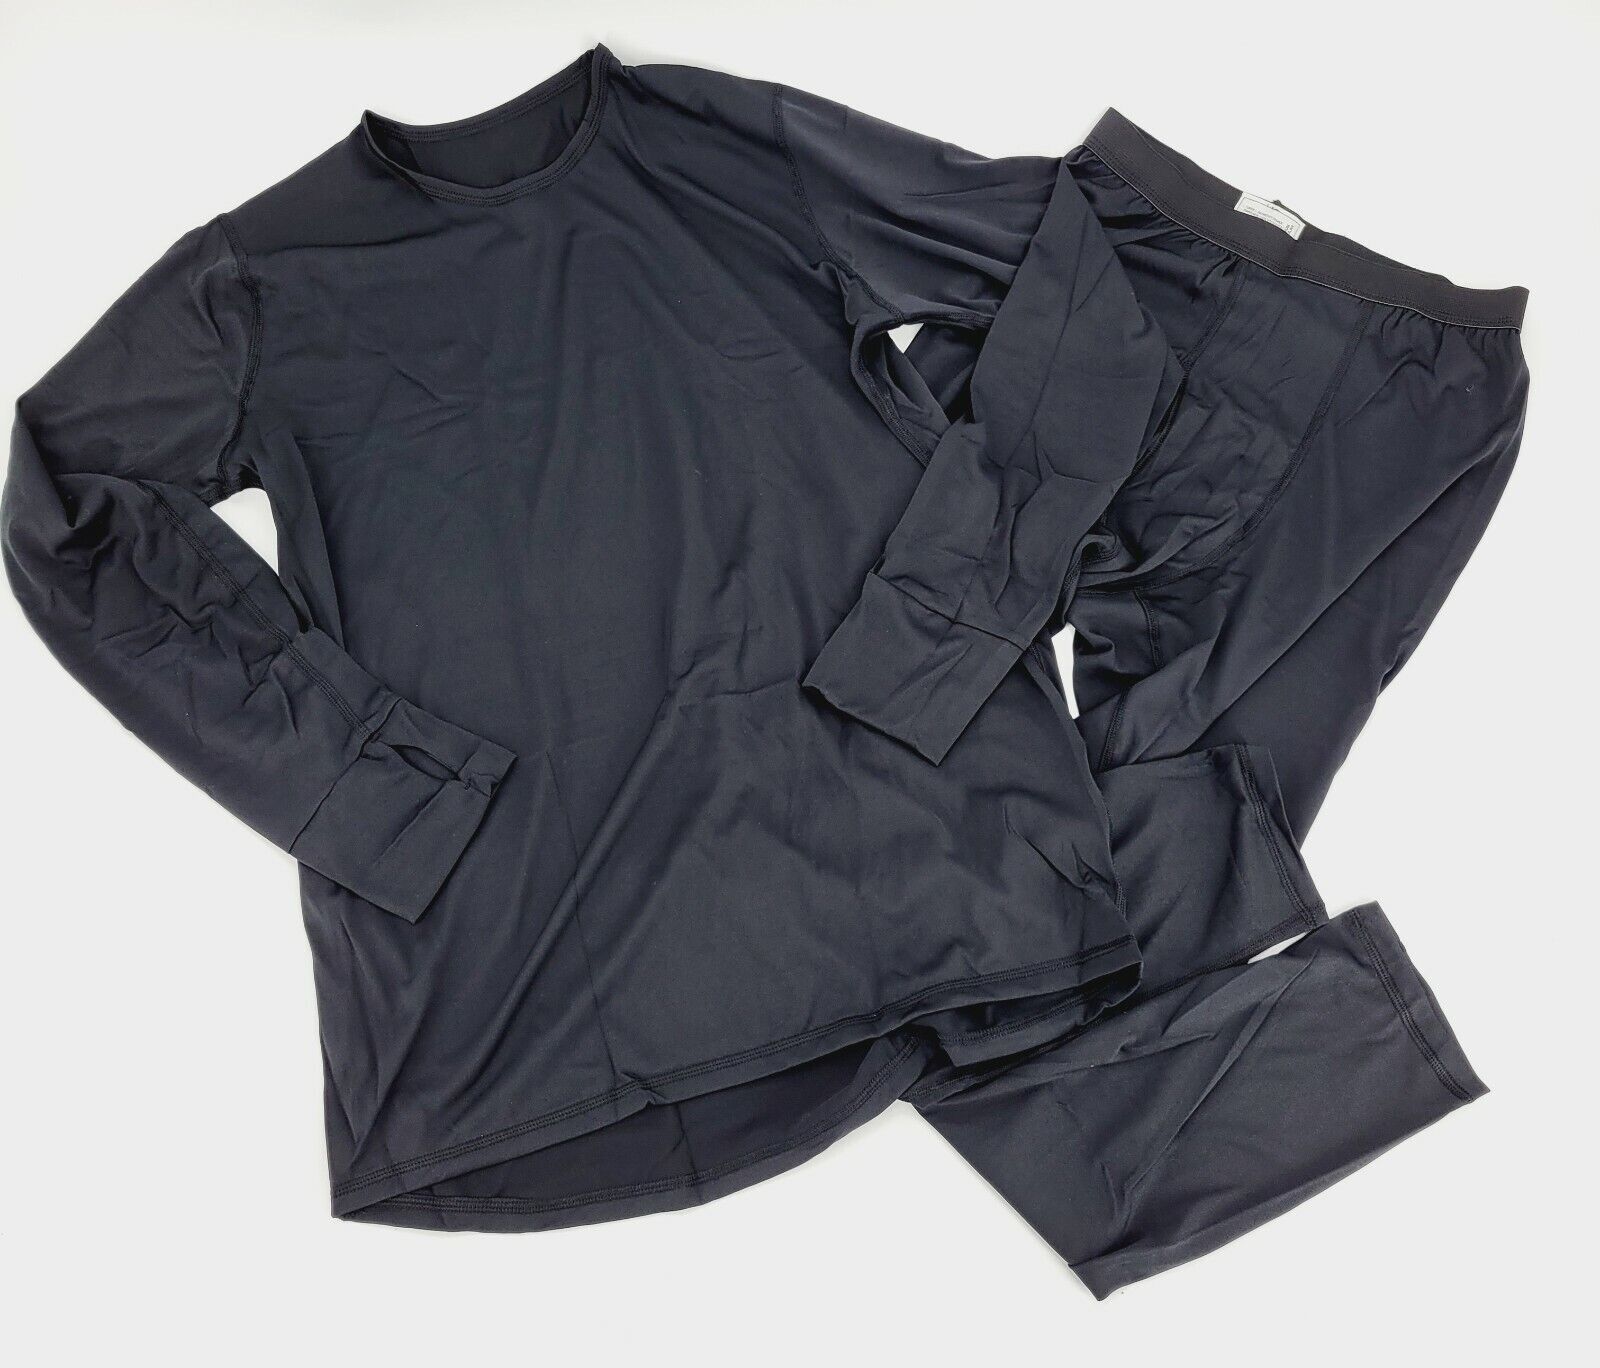 Polartec Power Dry Layer 1 Underwear Set Medium Regular Military SPEAR ECWCS NIP